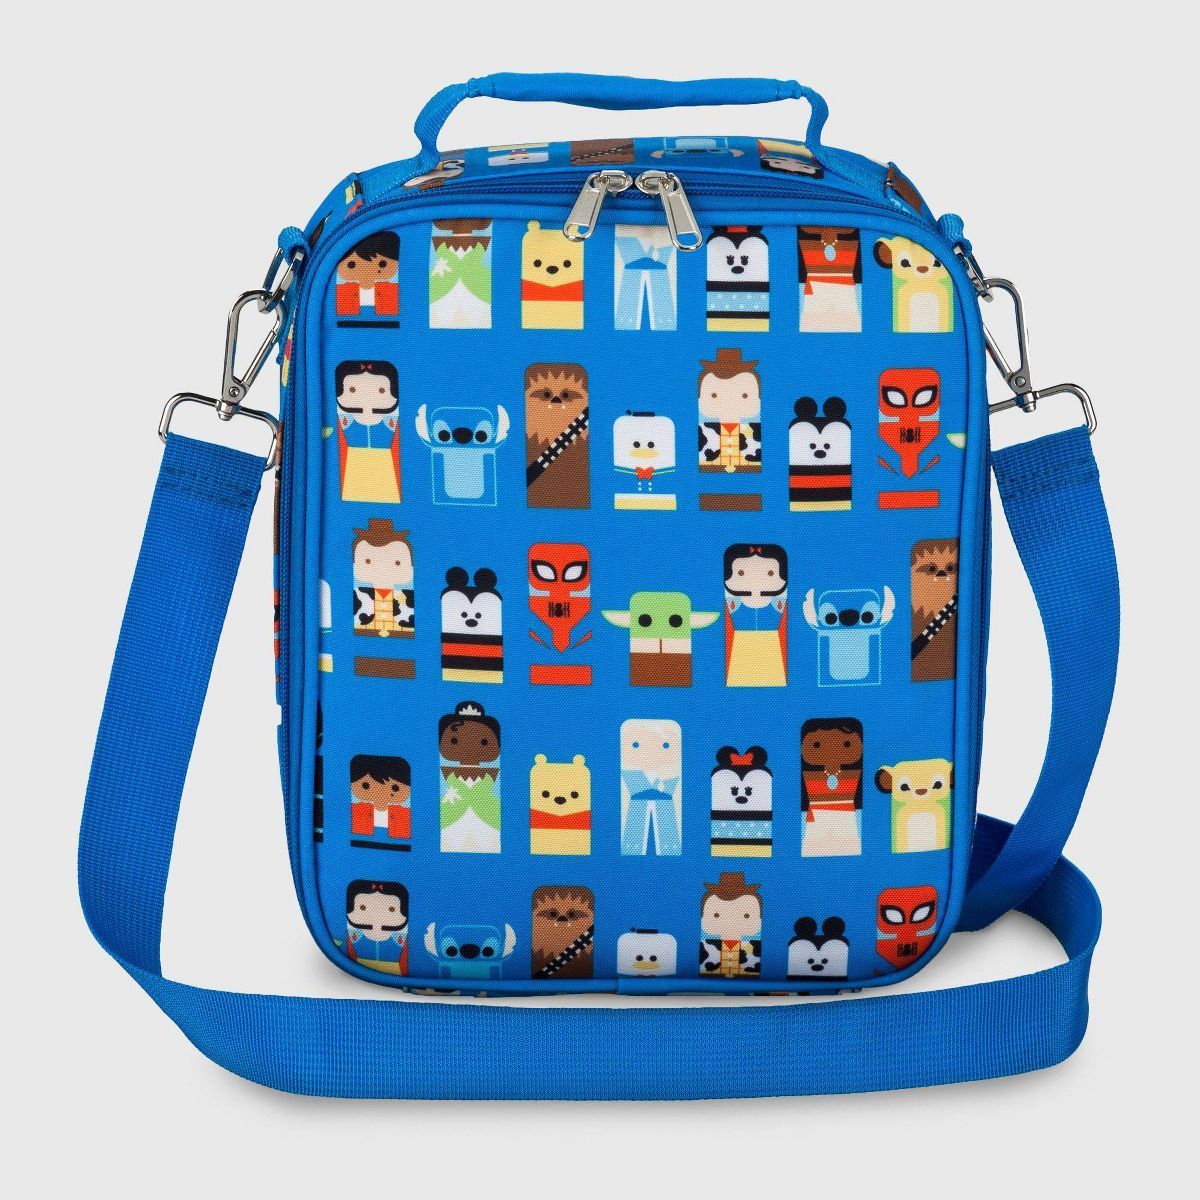 Disney Kids' Lunch Bag | Target